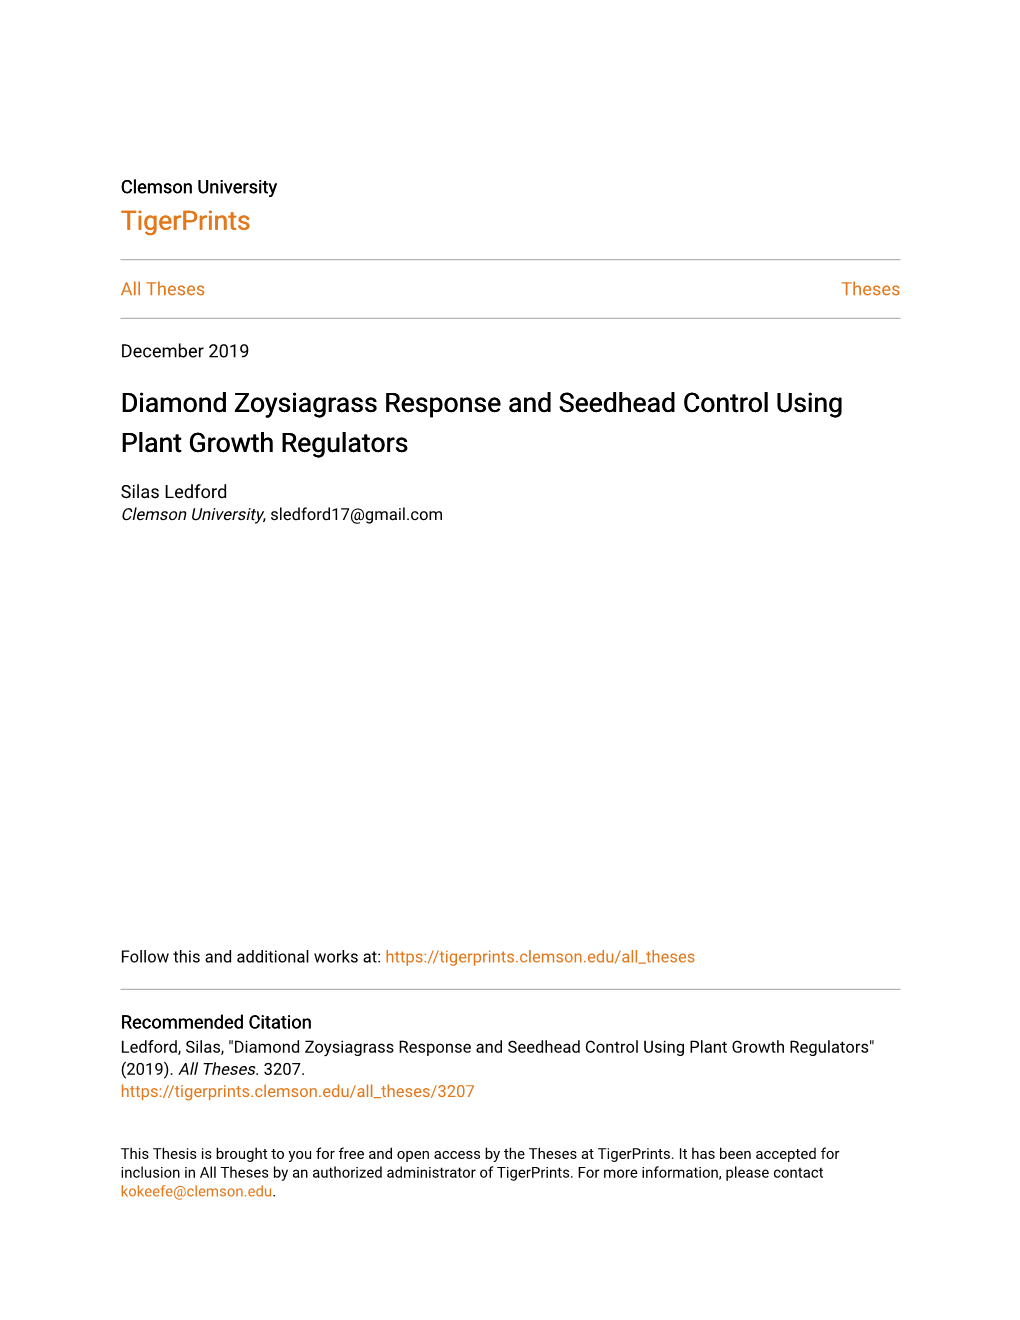 Diamond Zoysiagrass Response and Seedhead Control Using Plant Growth Regulators